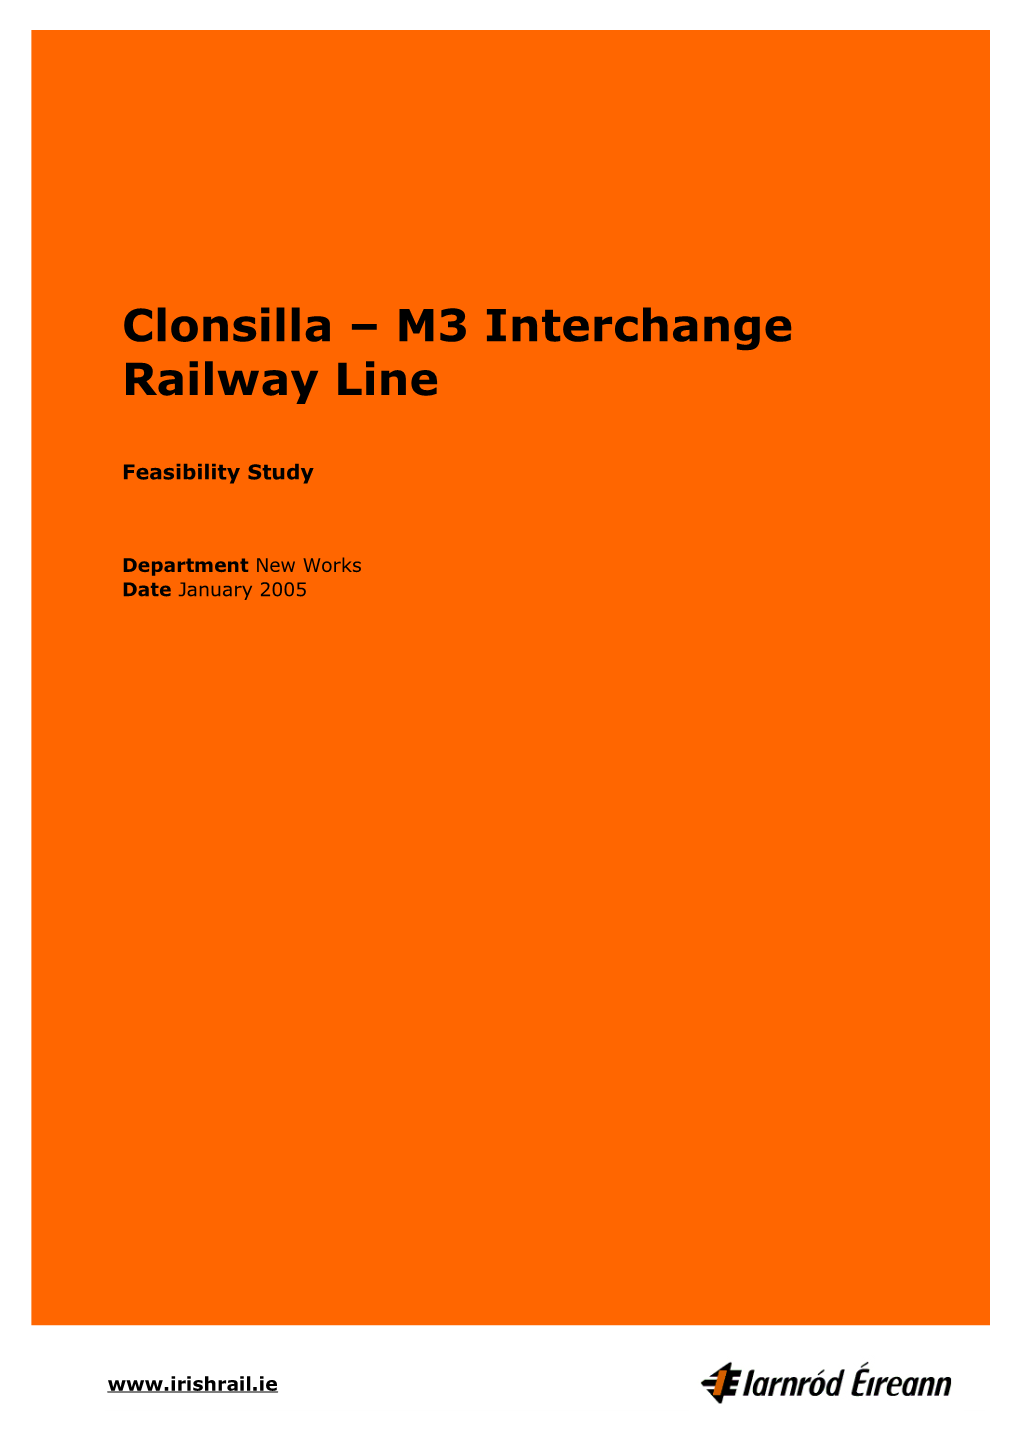 Clonsilla to M3 Interchange Railway Line Feasibility Study